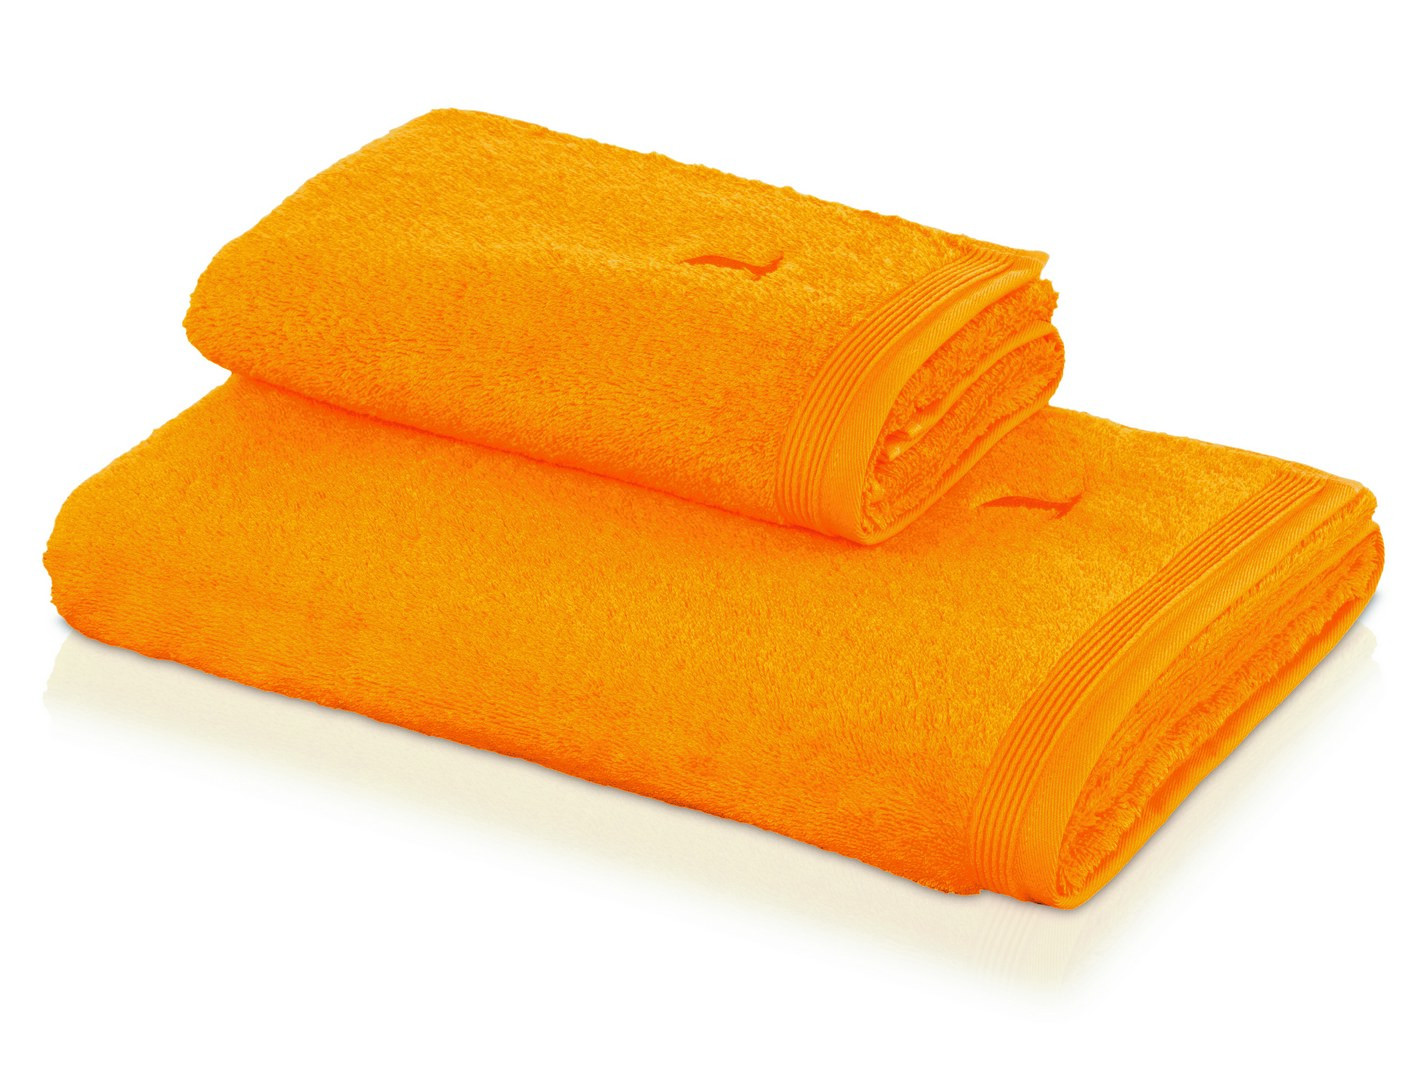 MÖVE Superwuschel 115 bath towel 80X150